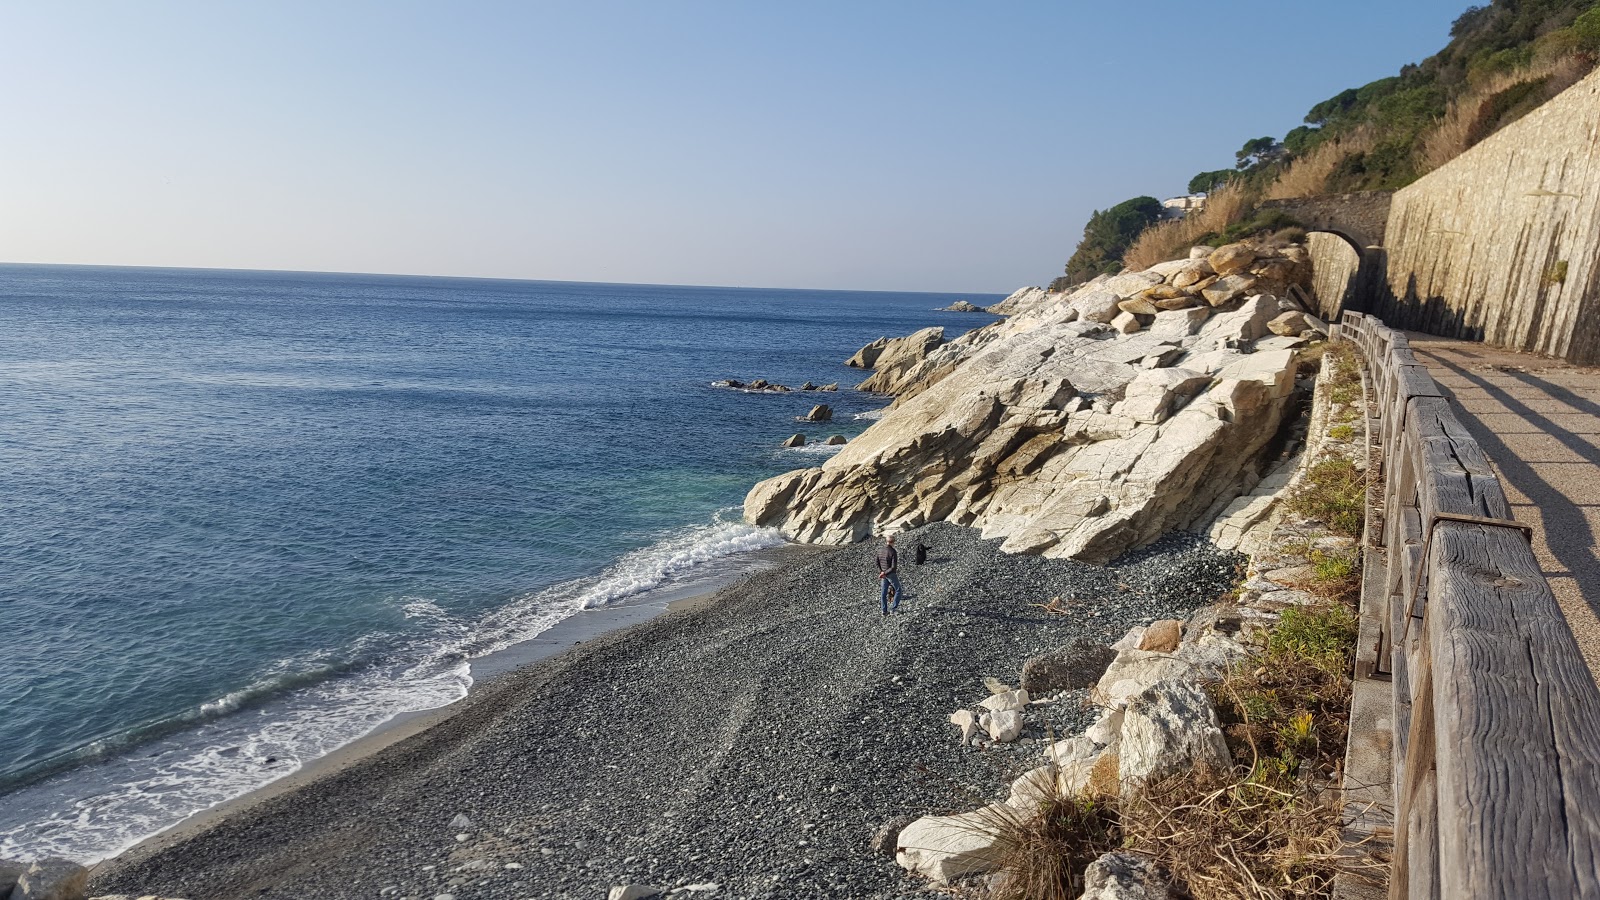 Foto av Spiaggia libera Abbelinou med blå rent vatten yta